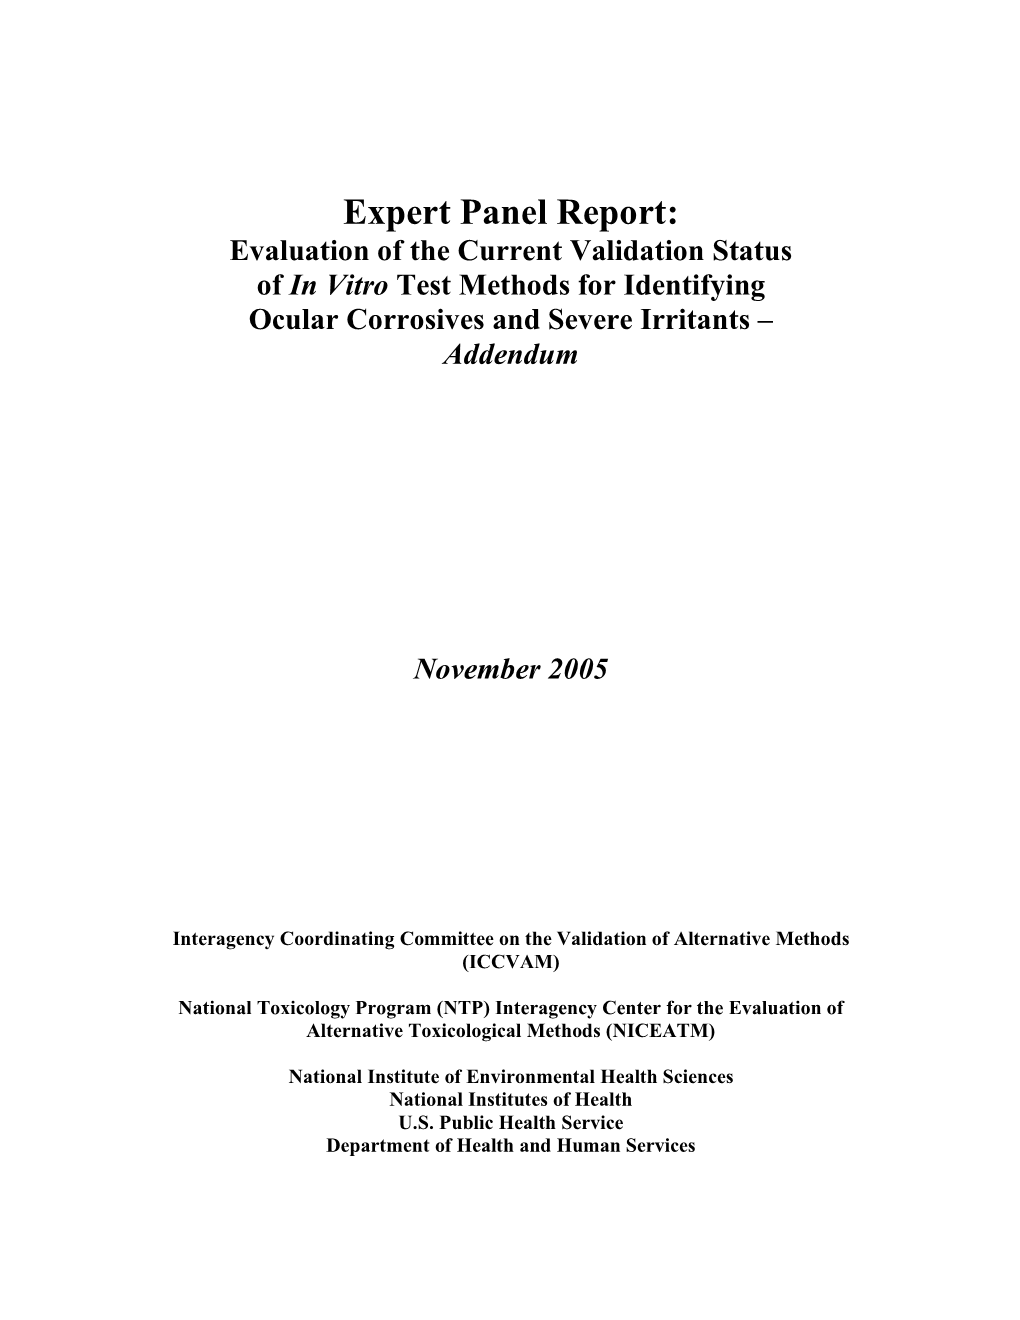 Addendum to Expert Panel Report